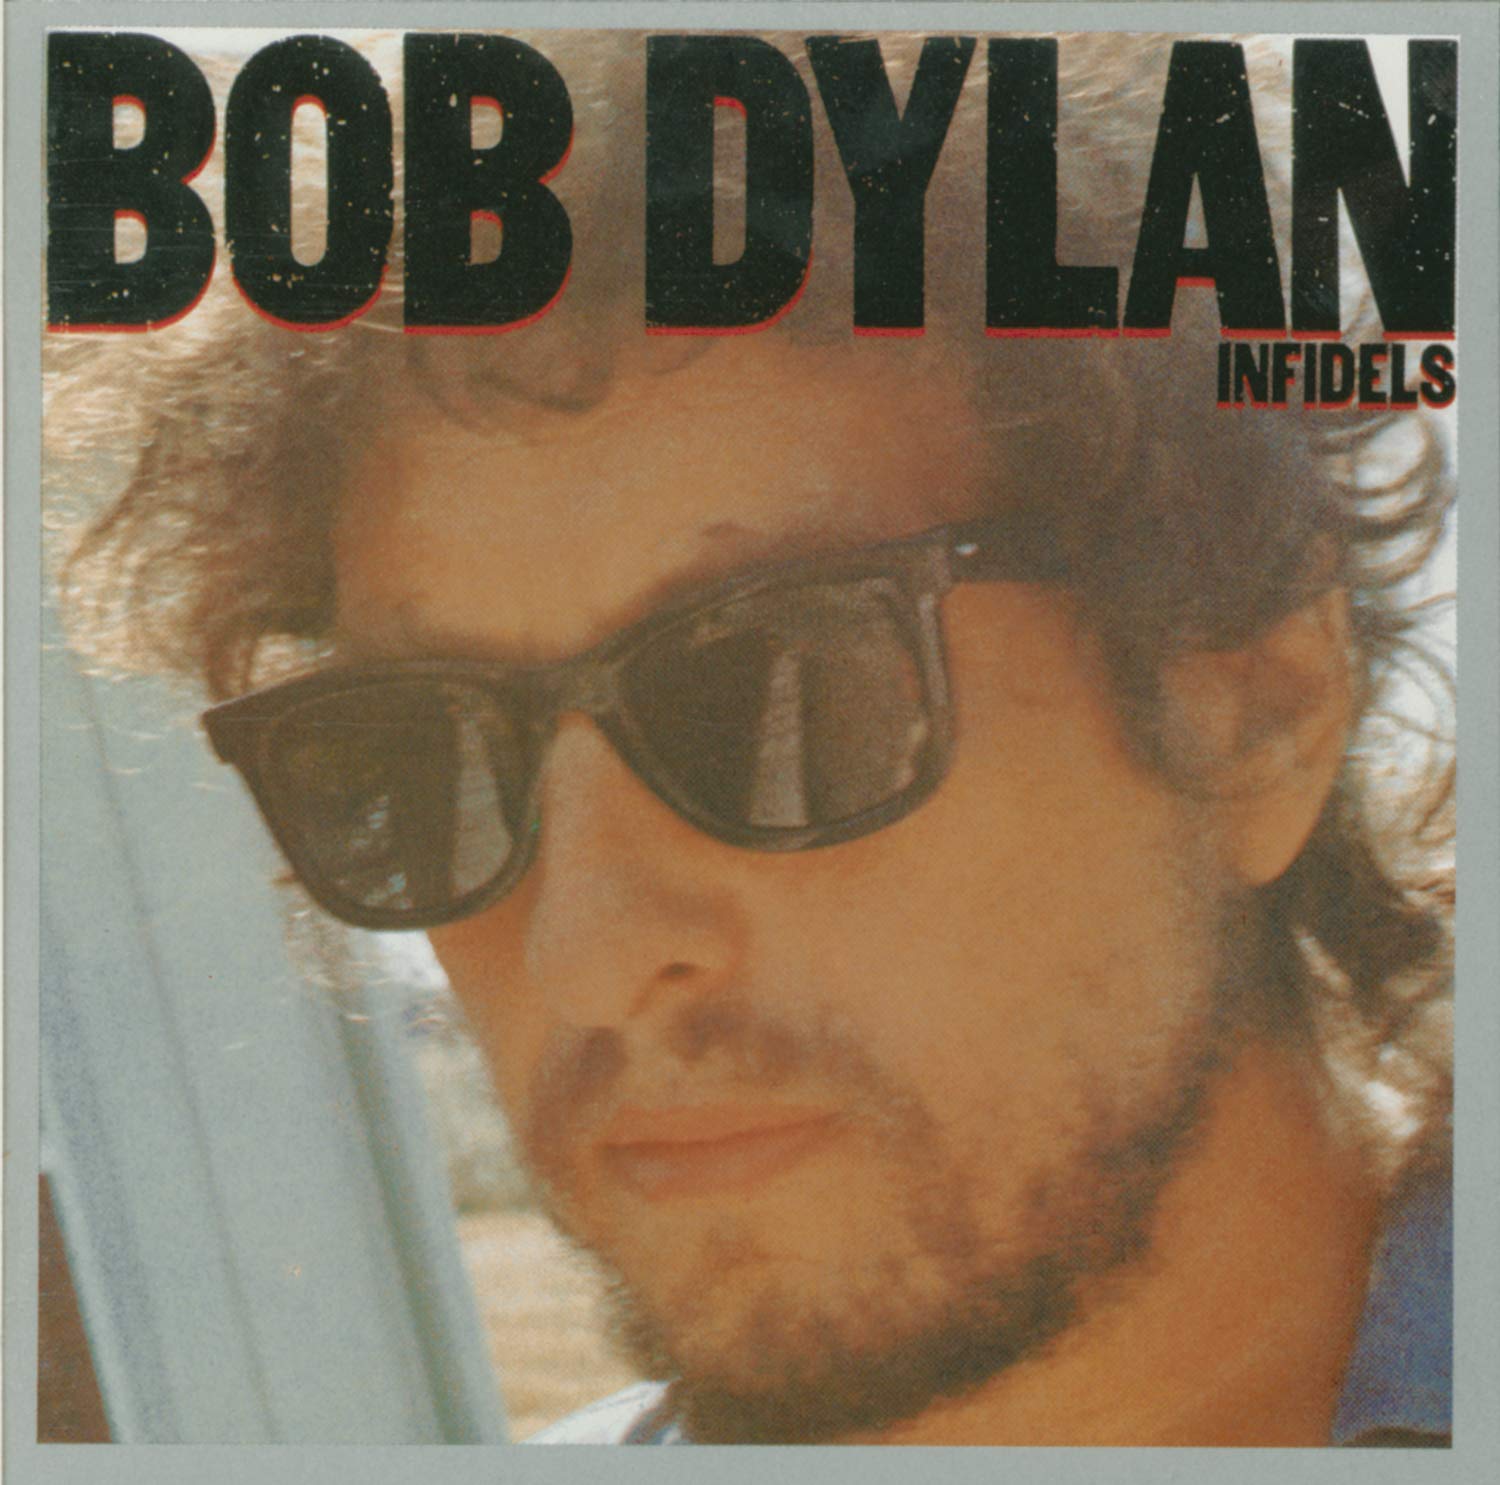 Bob Dylan -Infidels